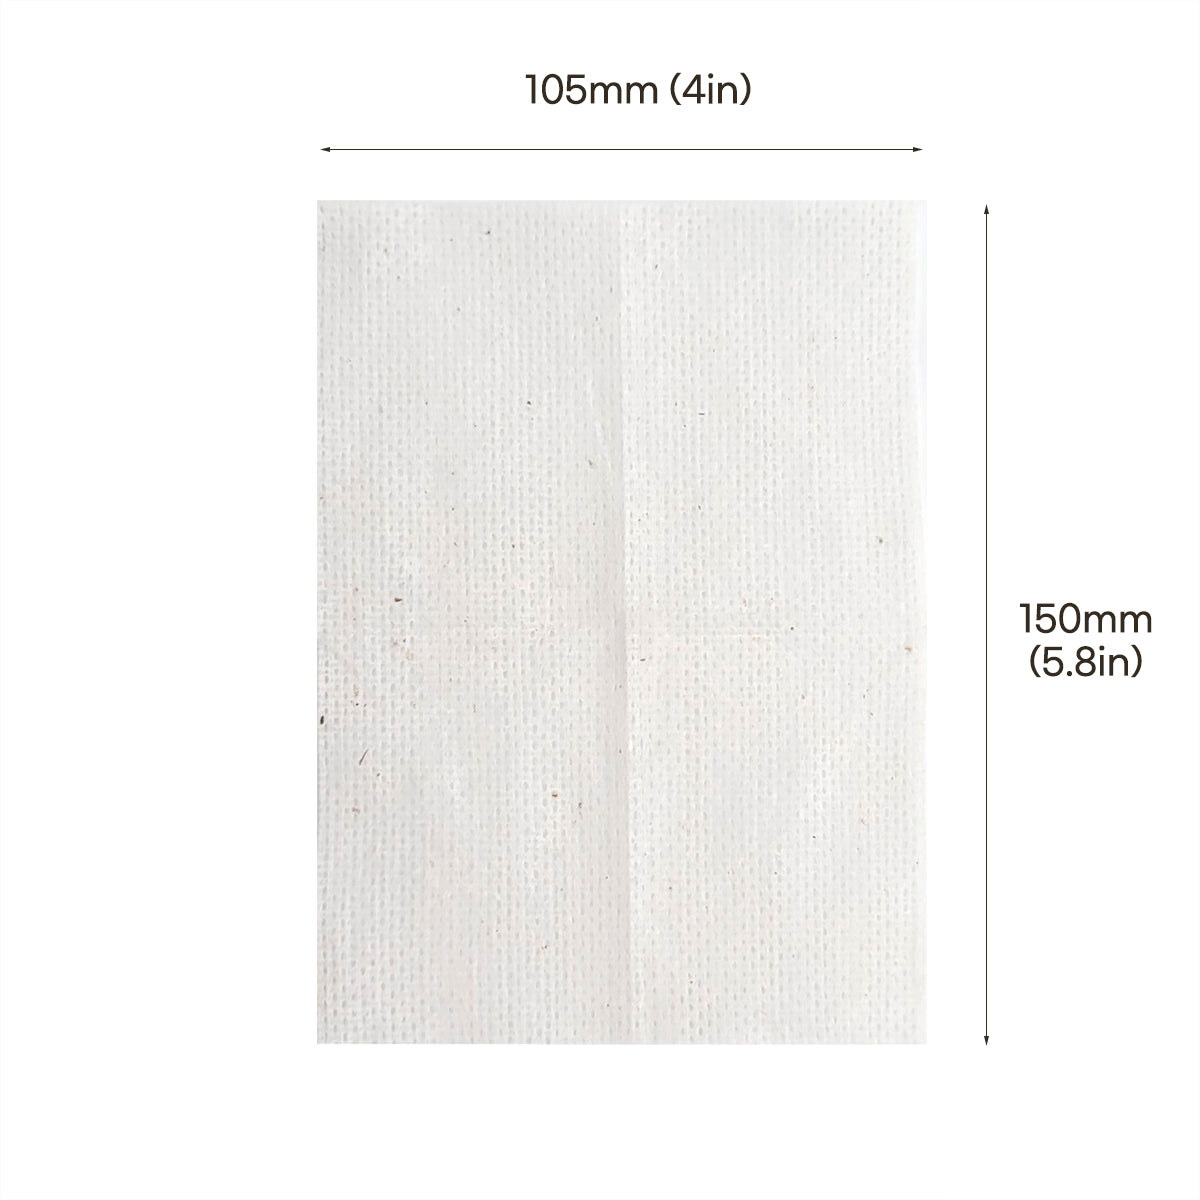 Unbleached & Non-Fluorescent Large Size Cotton Sheet 200 Count - Textured Type